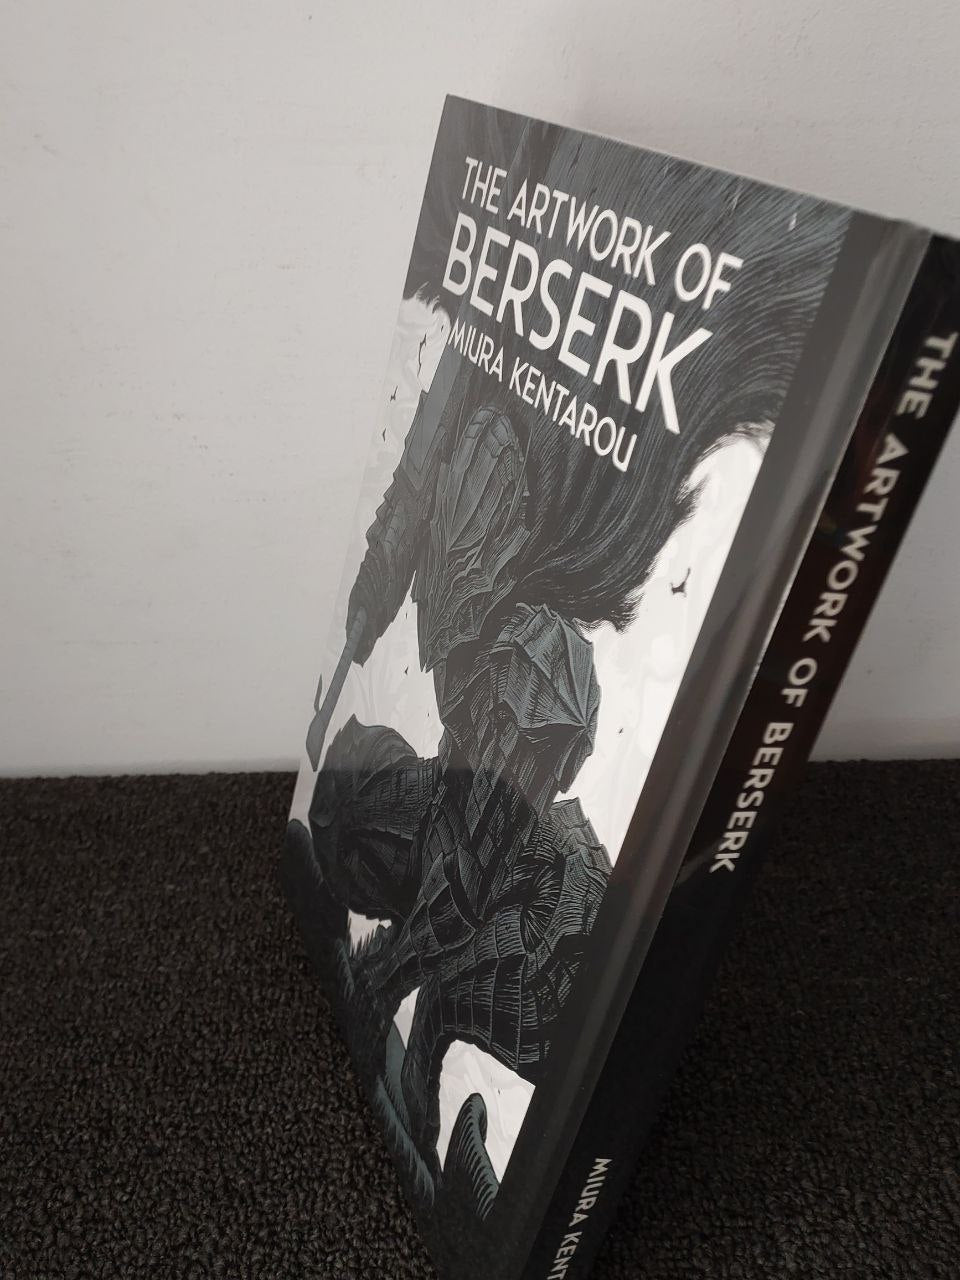 Berserk (ベルセルク) The Artwork Of Berserk Exhibition - Miura Kentarou